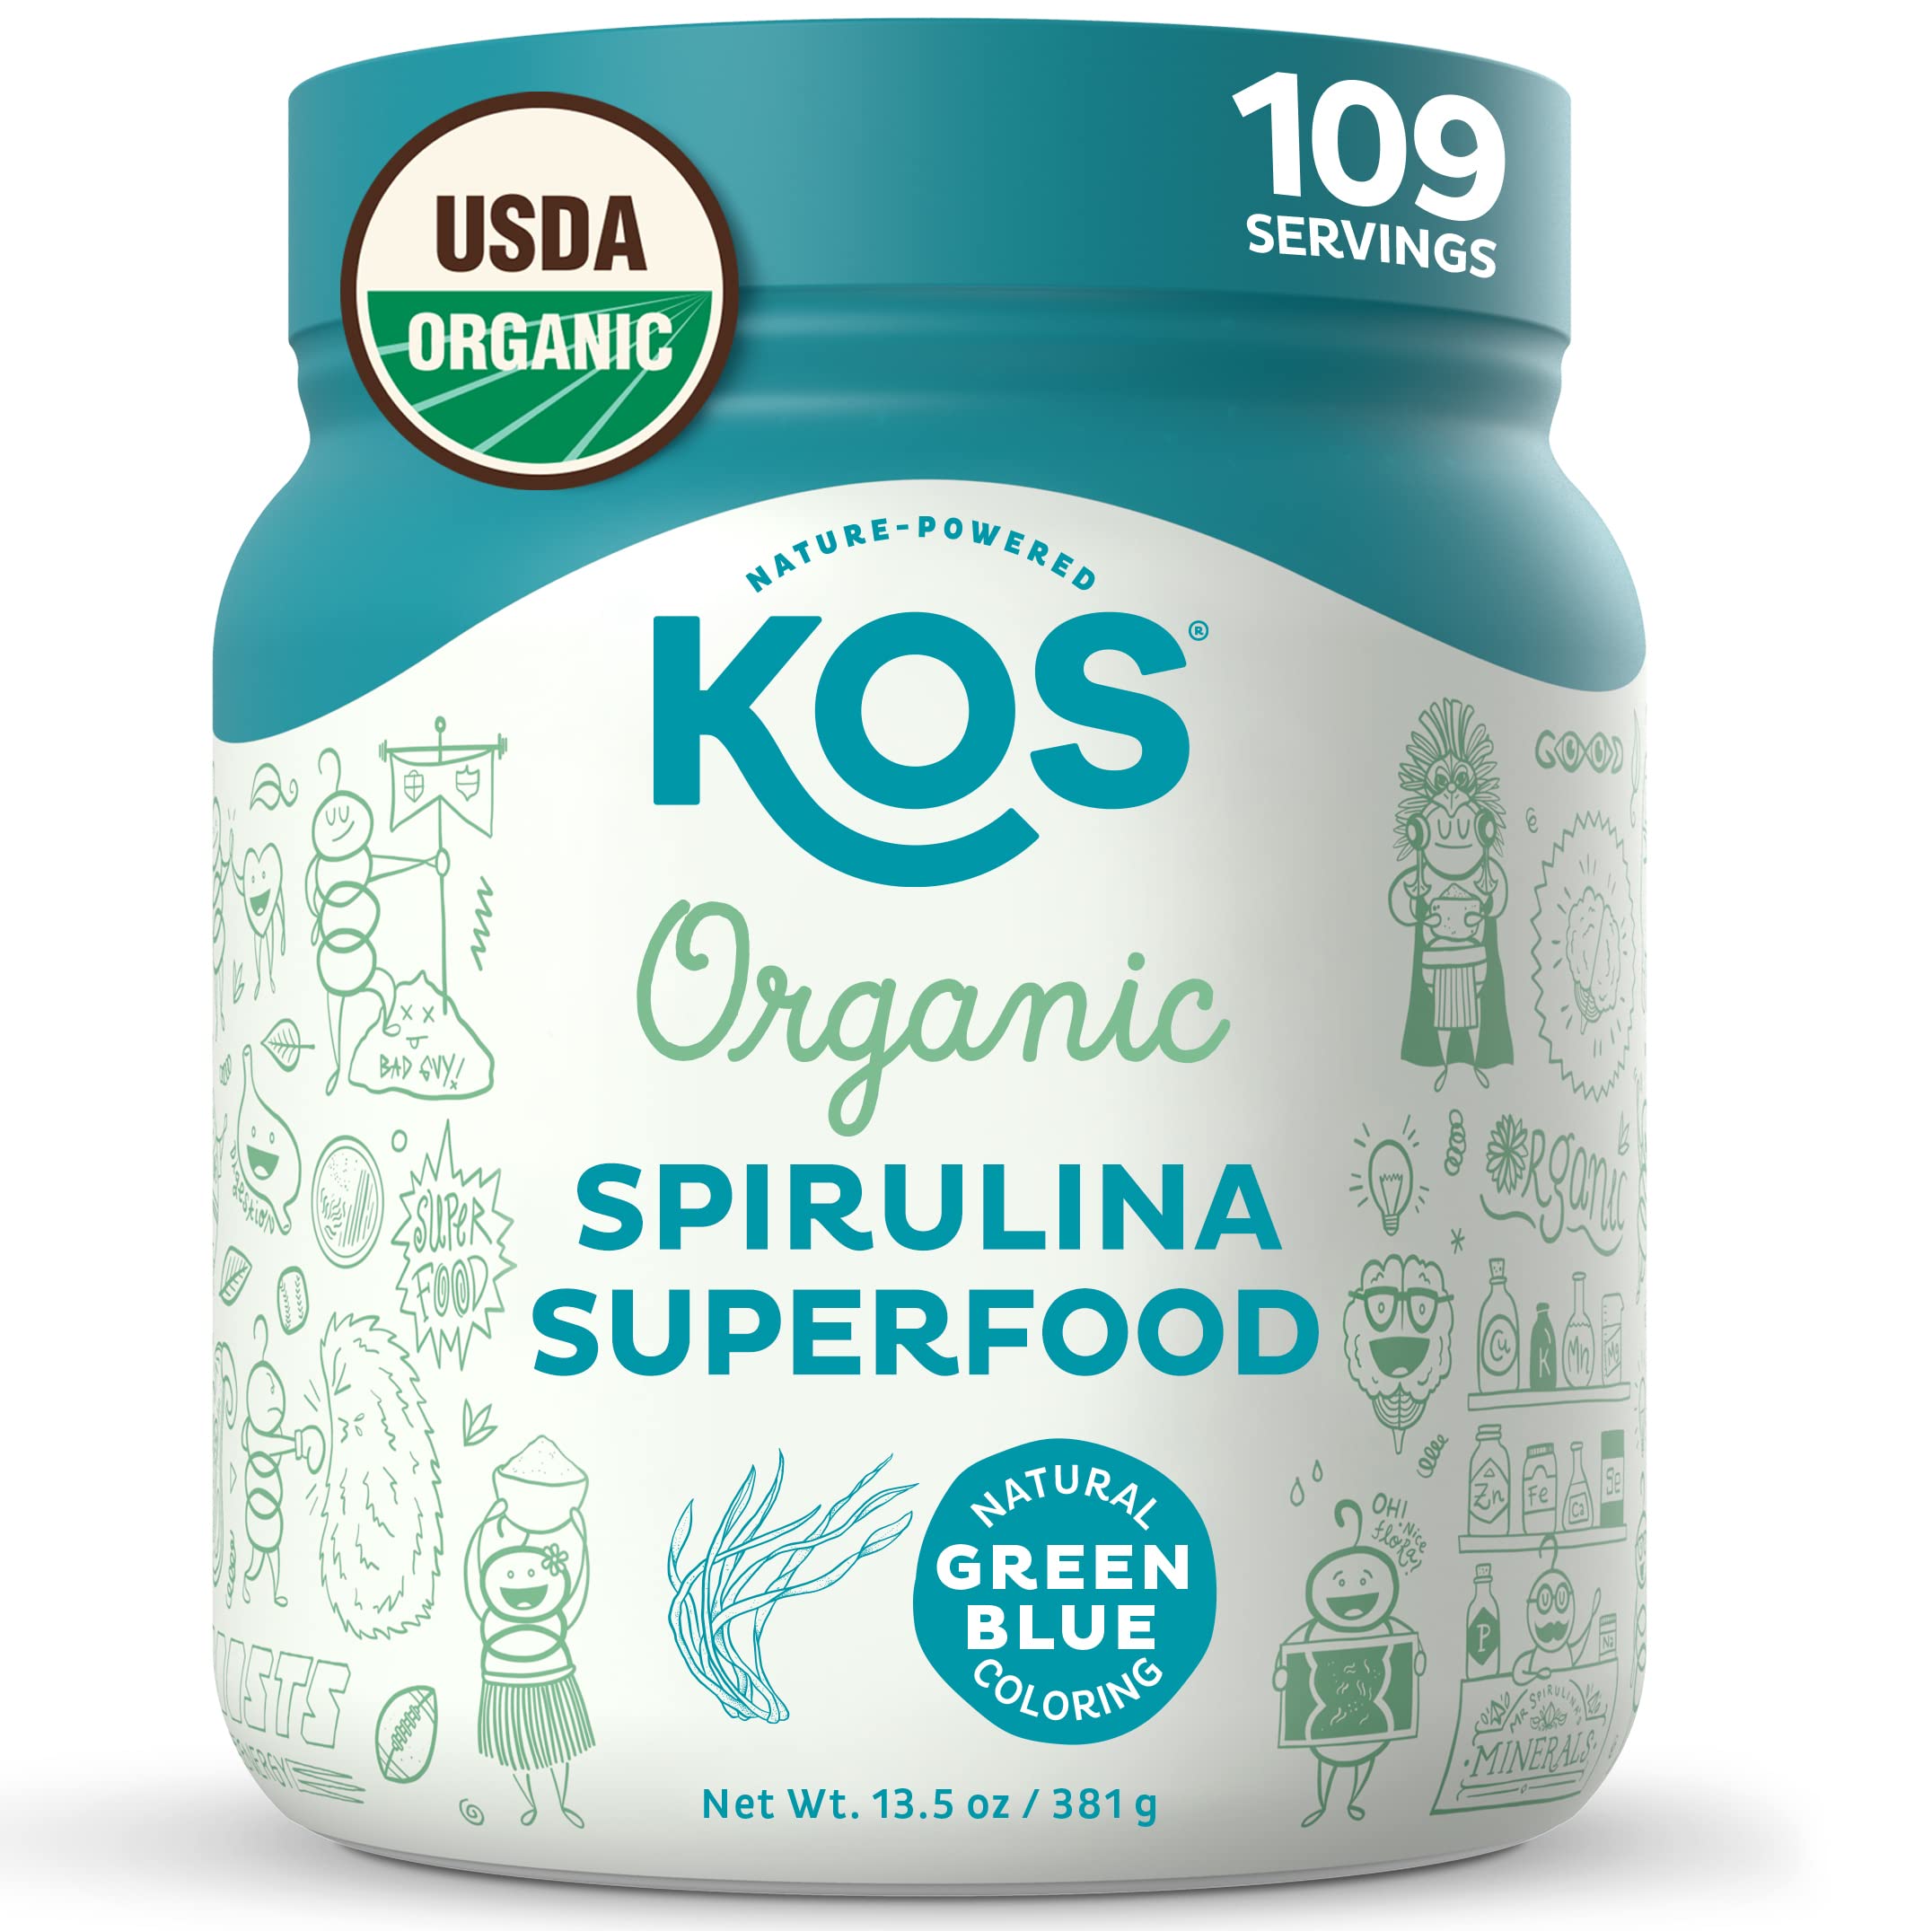 KOS USDA Organic Spirulina Powder - 100% Pure, Non-Irradiated Green Blue Spirulina Superfood Powder, Plant Based - Rich in Protein, Vitamins, Antioxidants & Fiber - Natural Taste, 13.5oz, 109 Servings